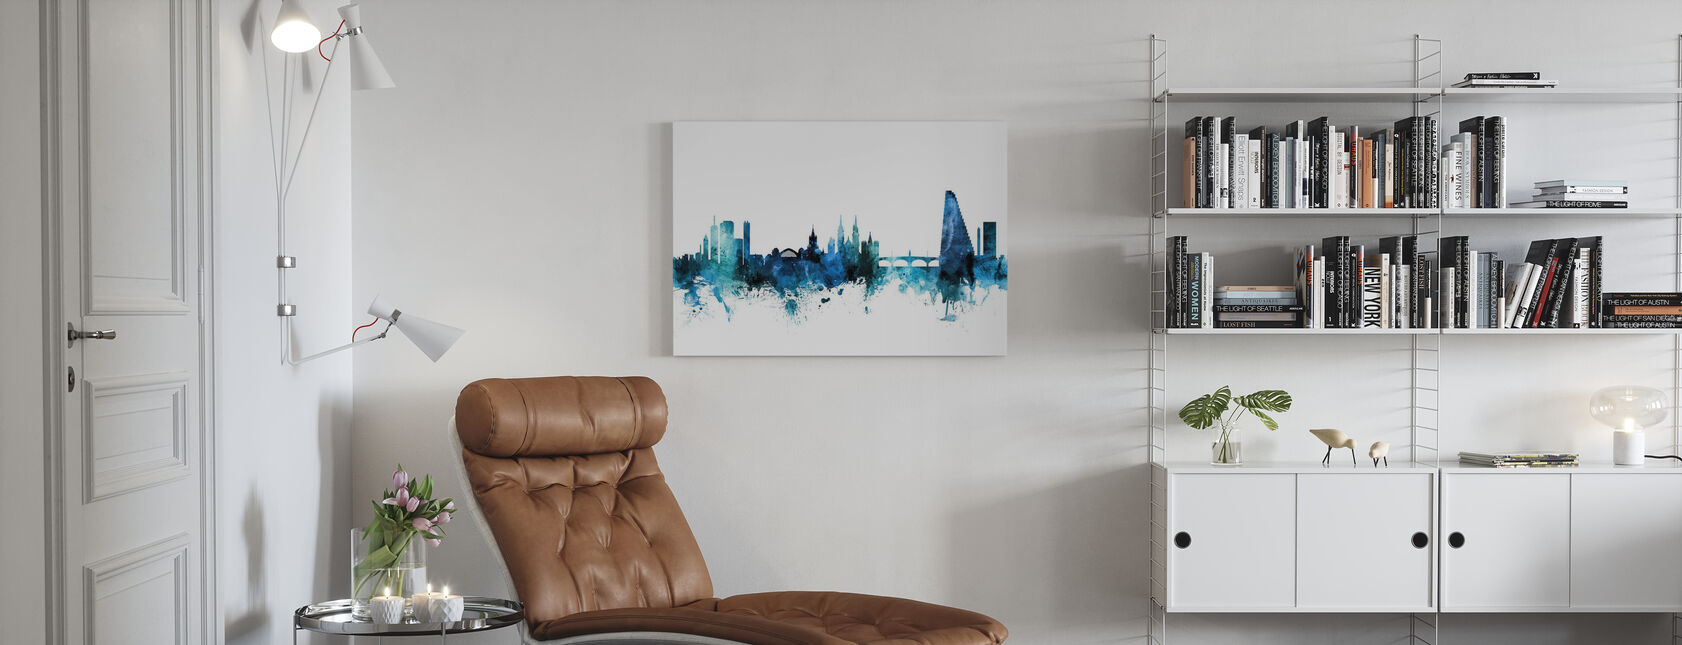 Basel Switzerland Skyline - Canvas print - Living Room